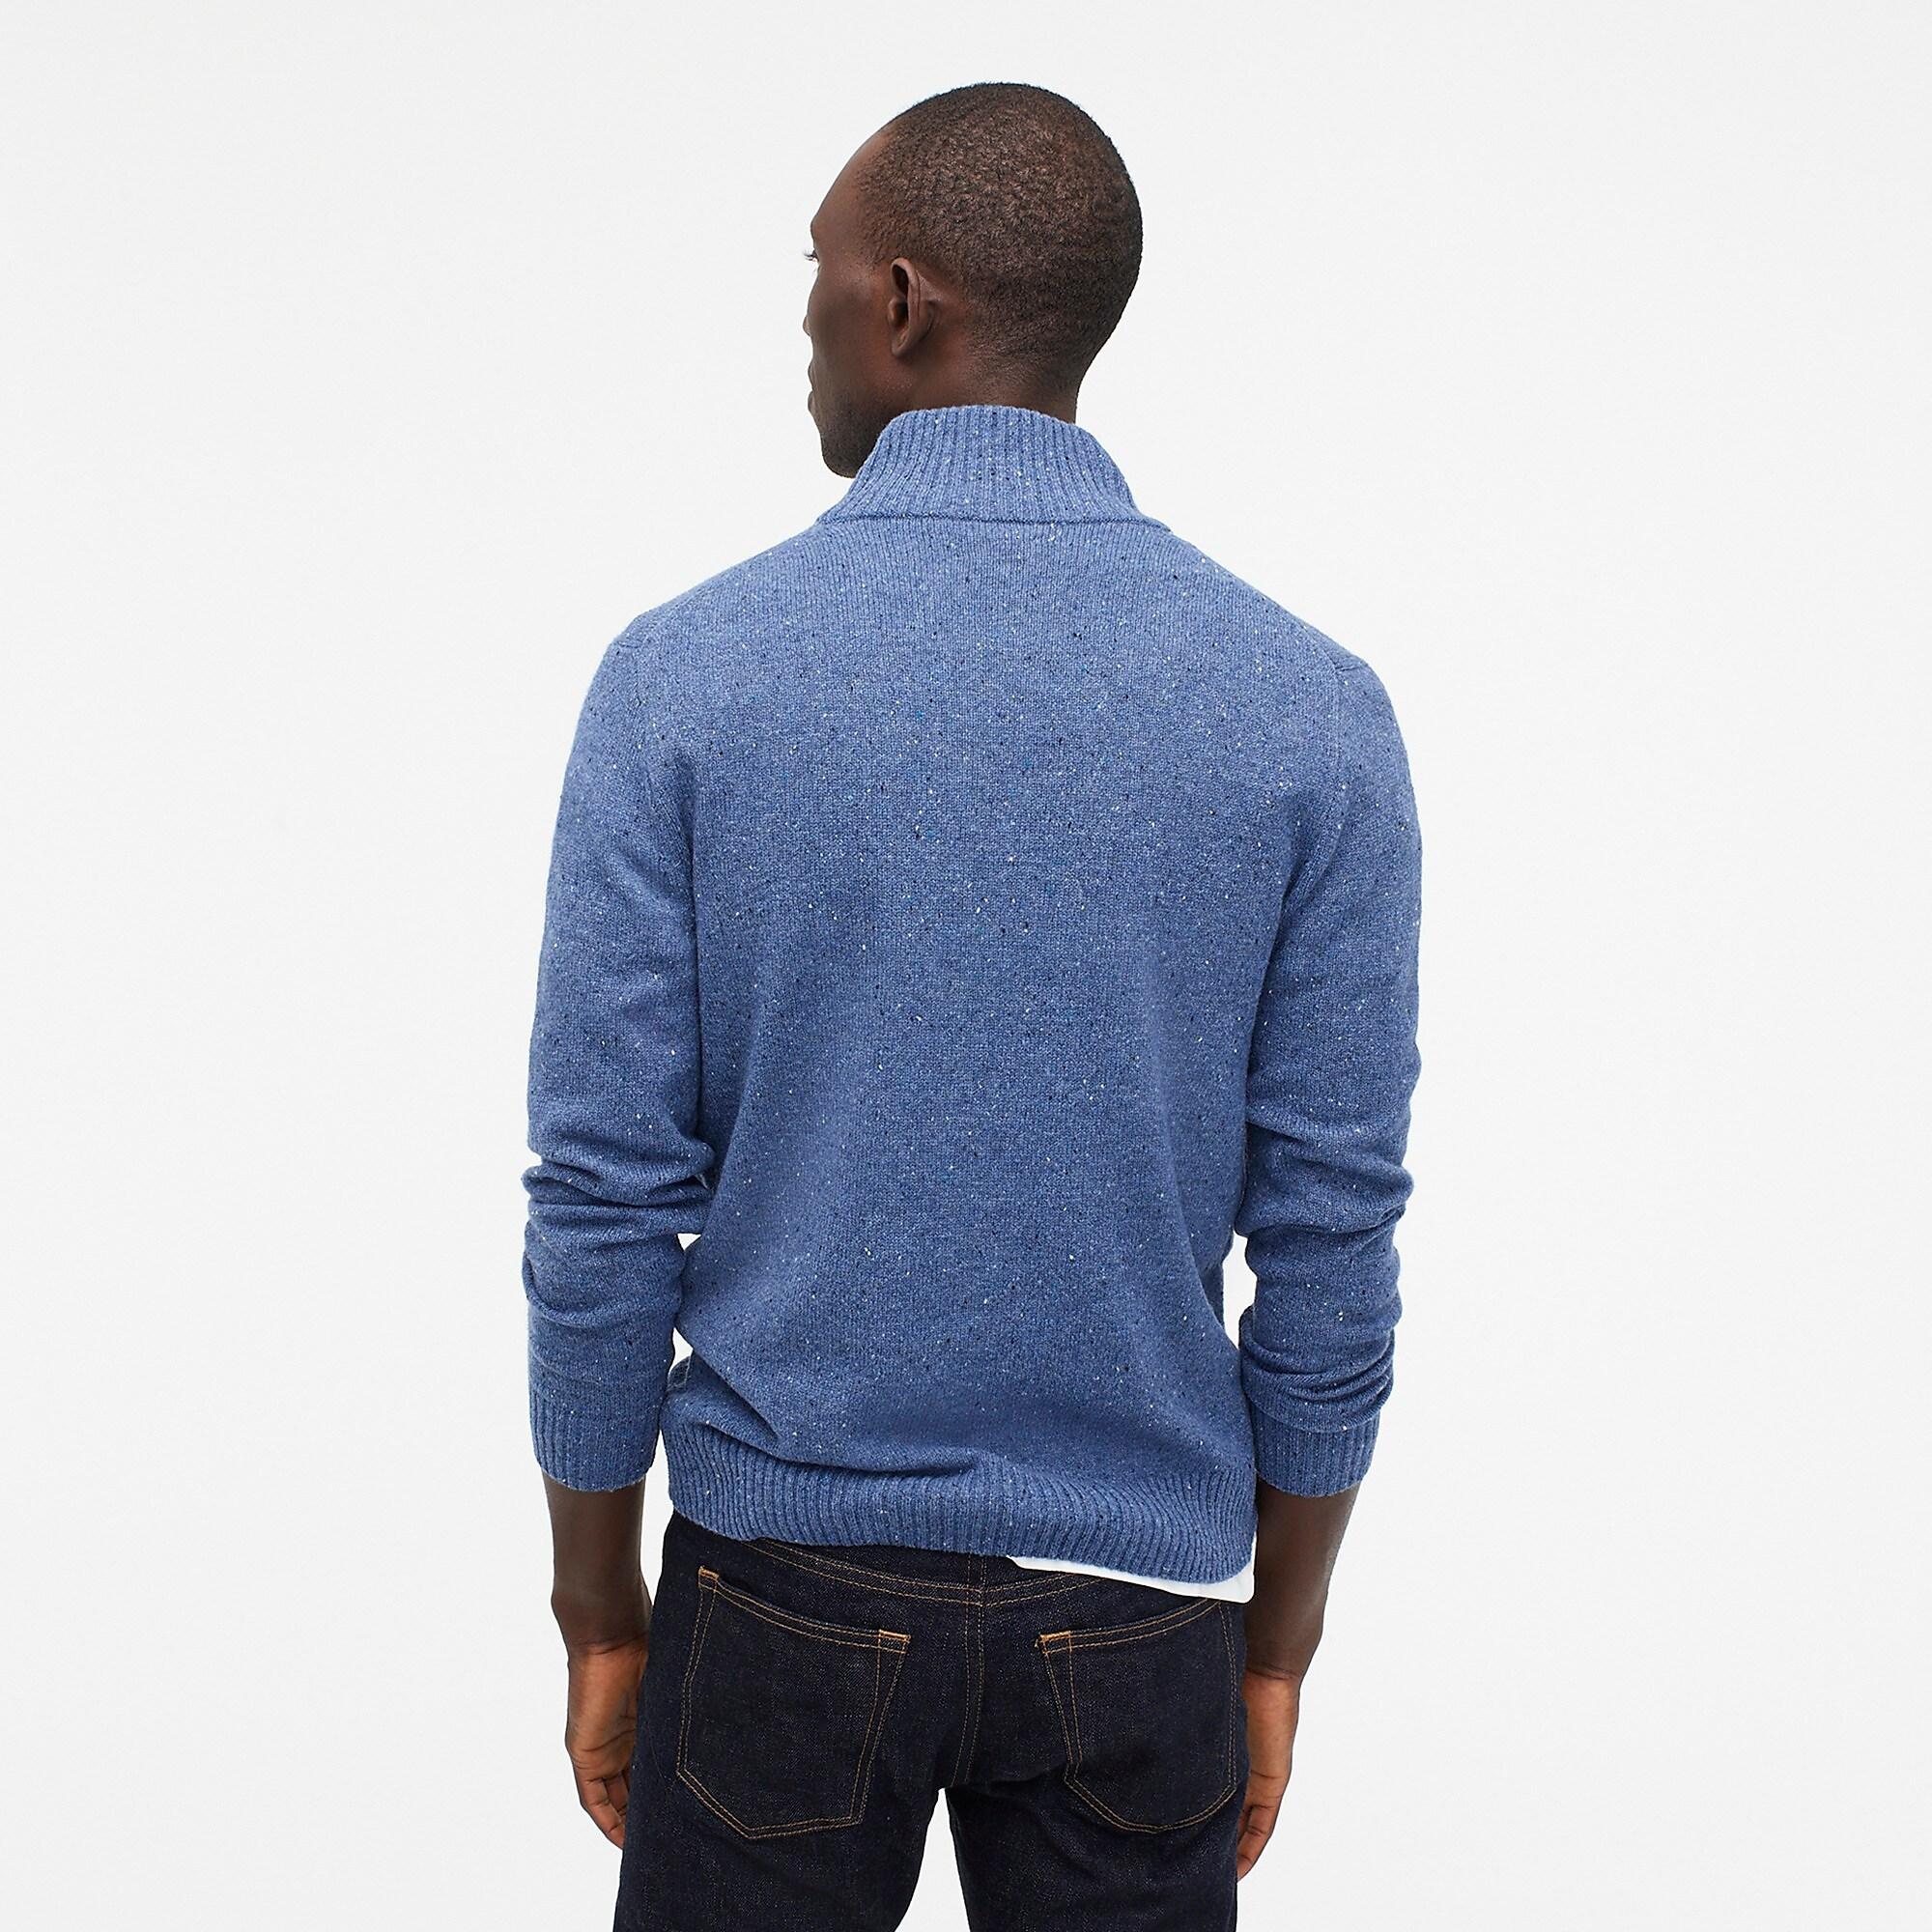 J.Crew Rugged Merino Wool Donegal Half-zip Sweater in Blue for Men - Lyst